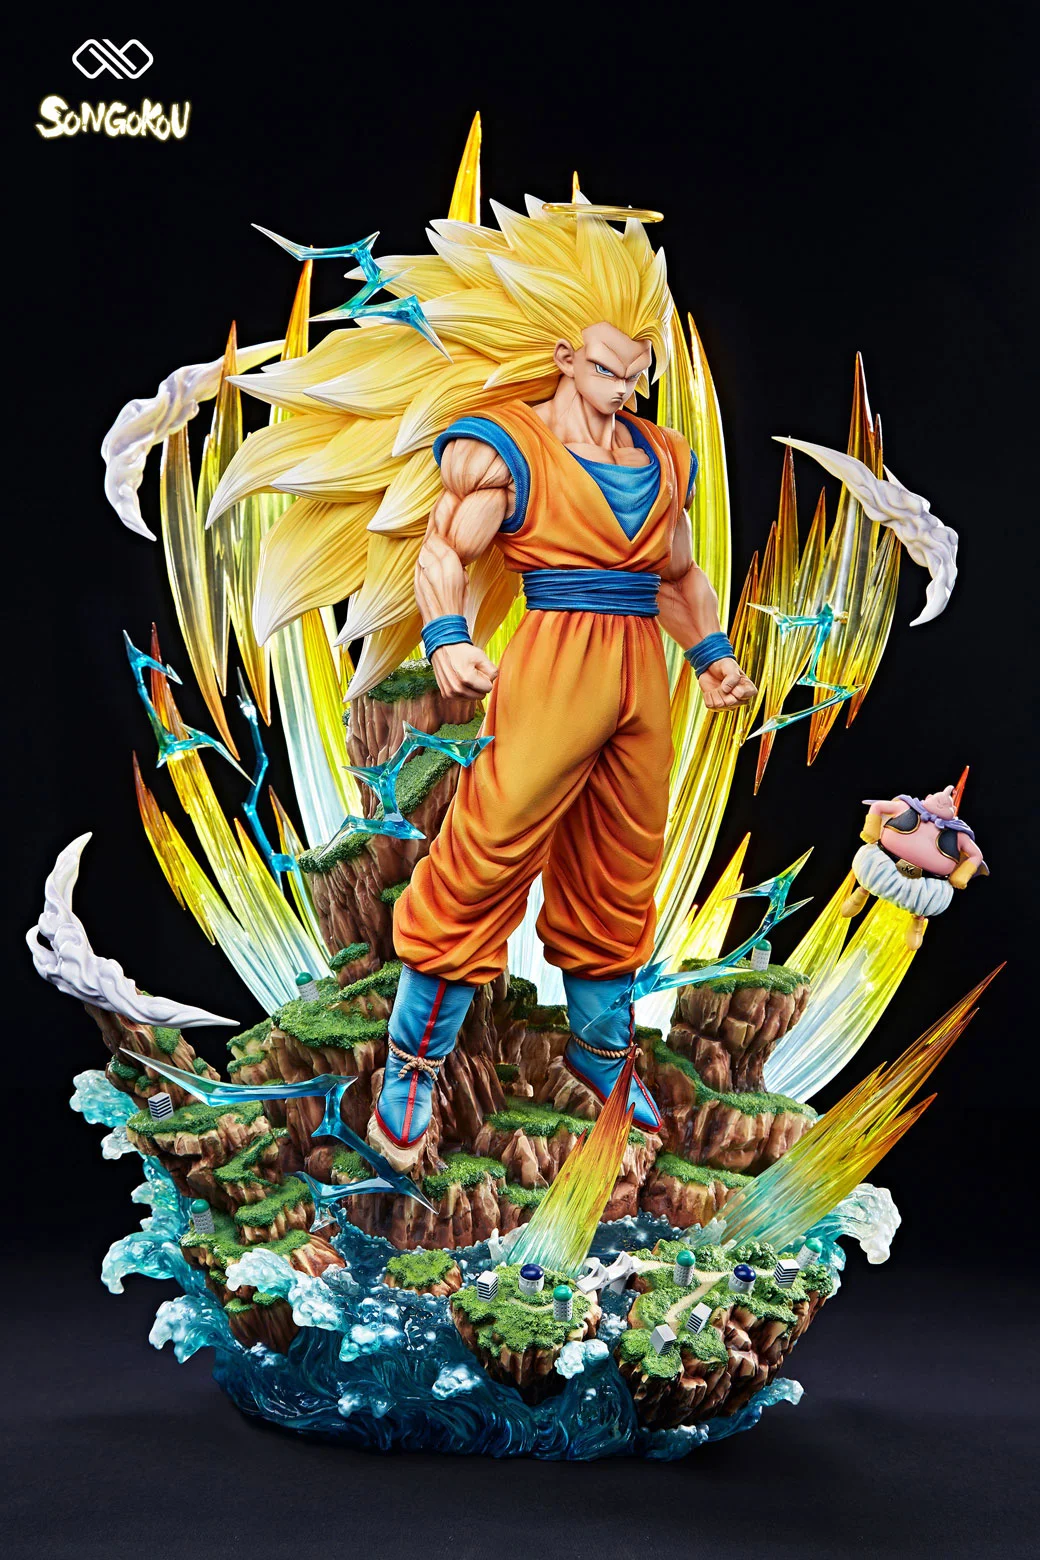 Super Saiyan 3 Son Goku Dragon Ball Z Action Figure 